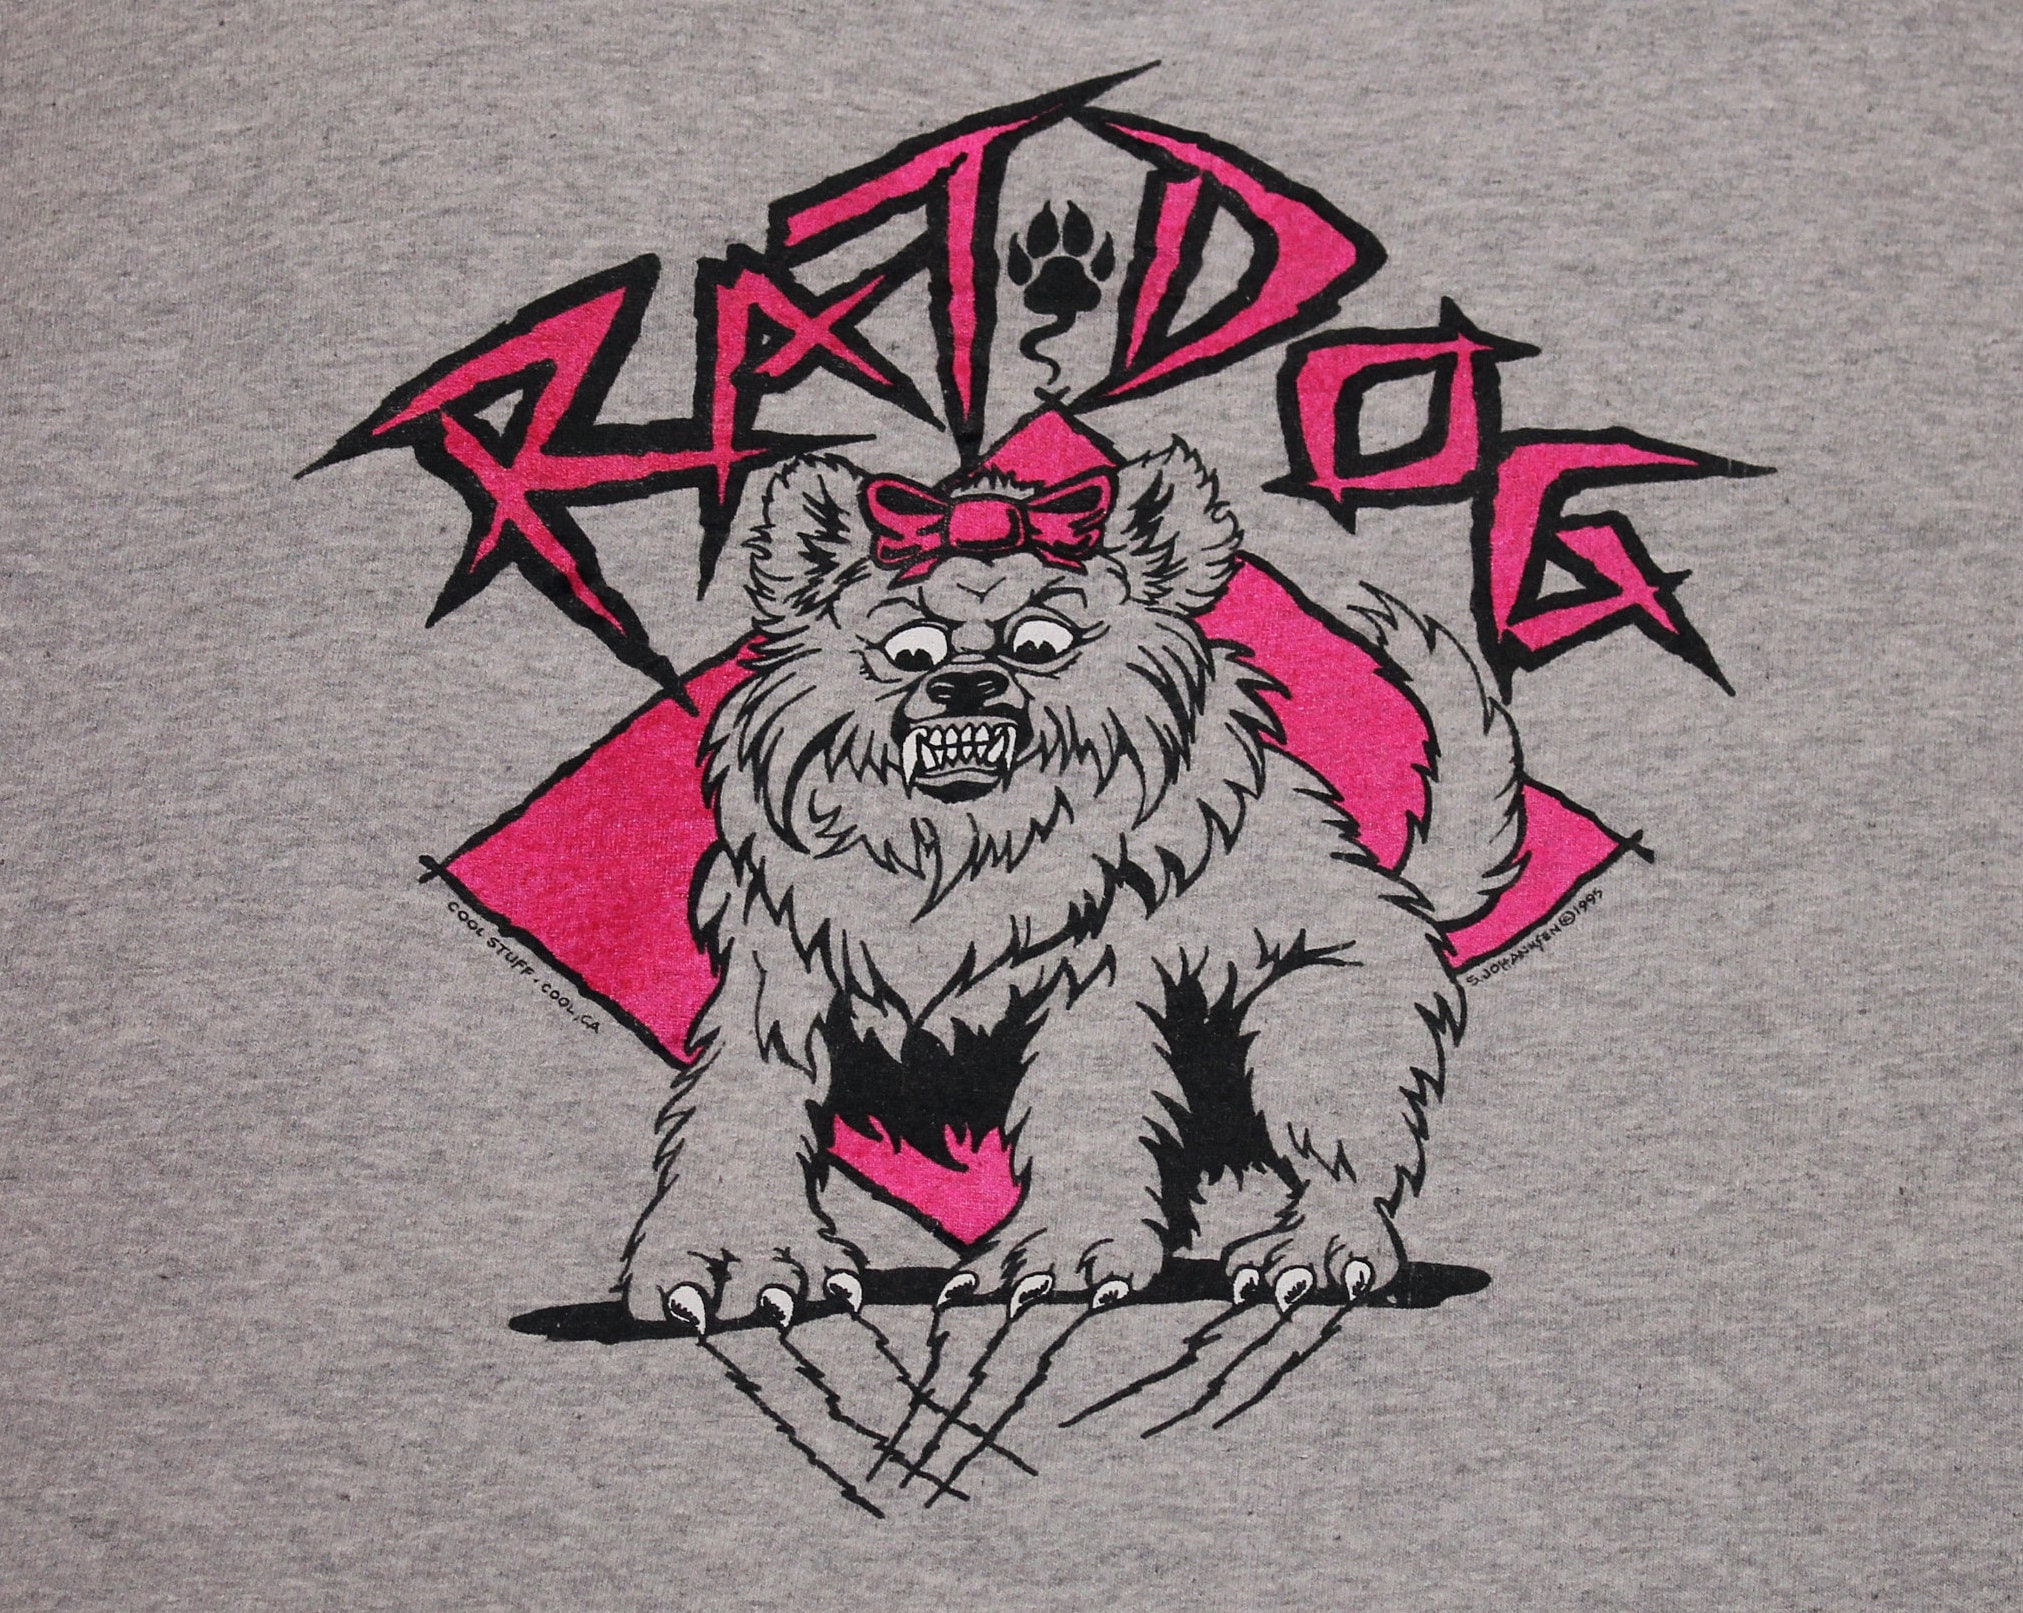 M/L * vtg 90s 1995 RatDog tour t shirt * rat dog bob weir grateful dead ...